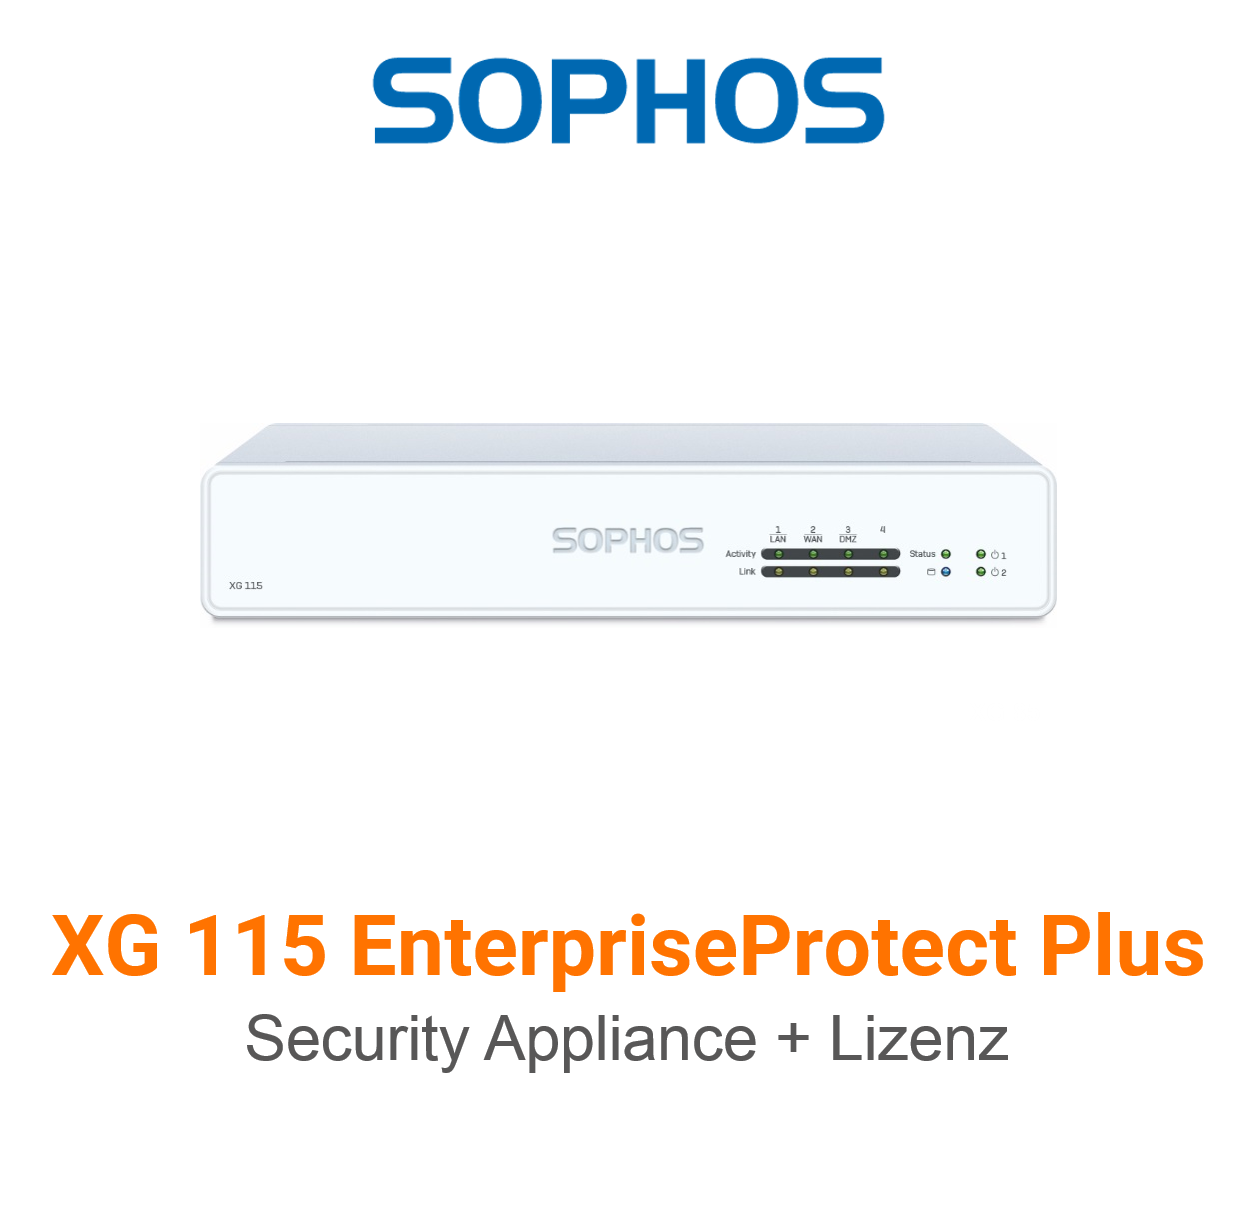 Sophos XG 115 EnterpriseProtect Plus Bundle (Hardware + Lizenz) (End of Sale/Life)